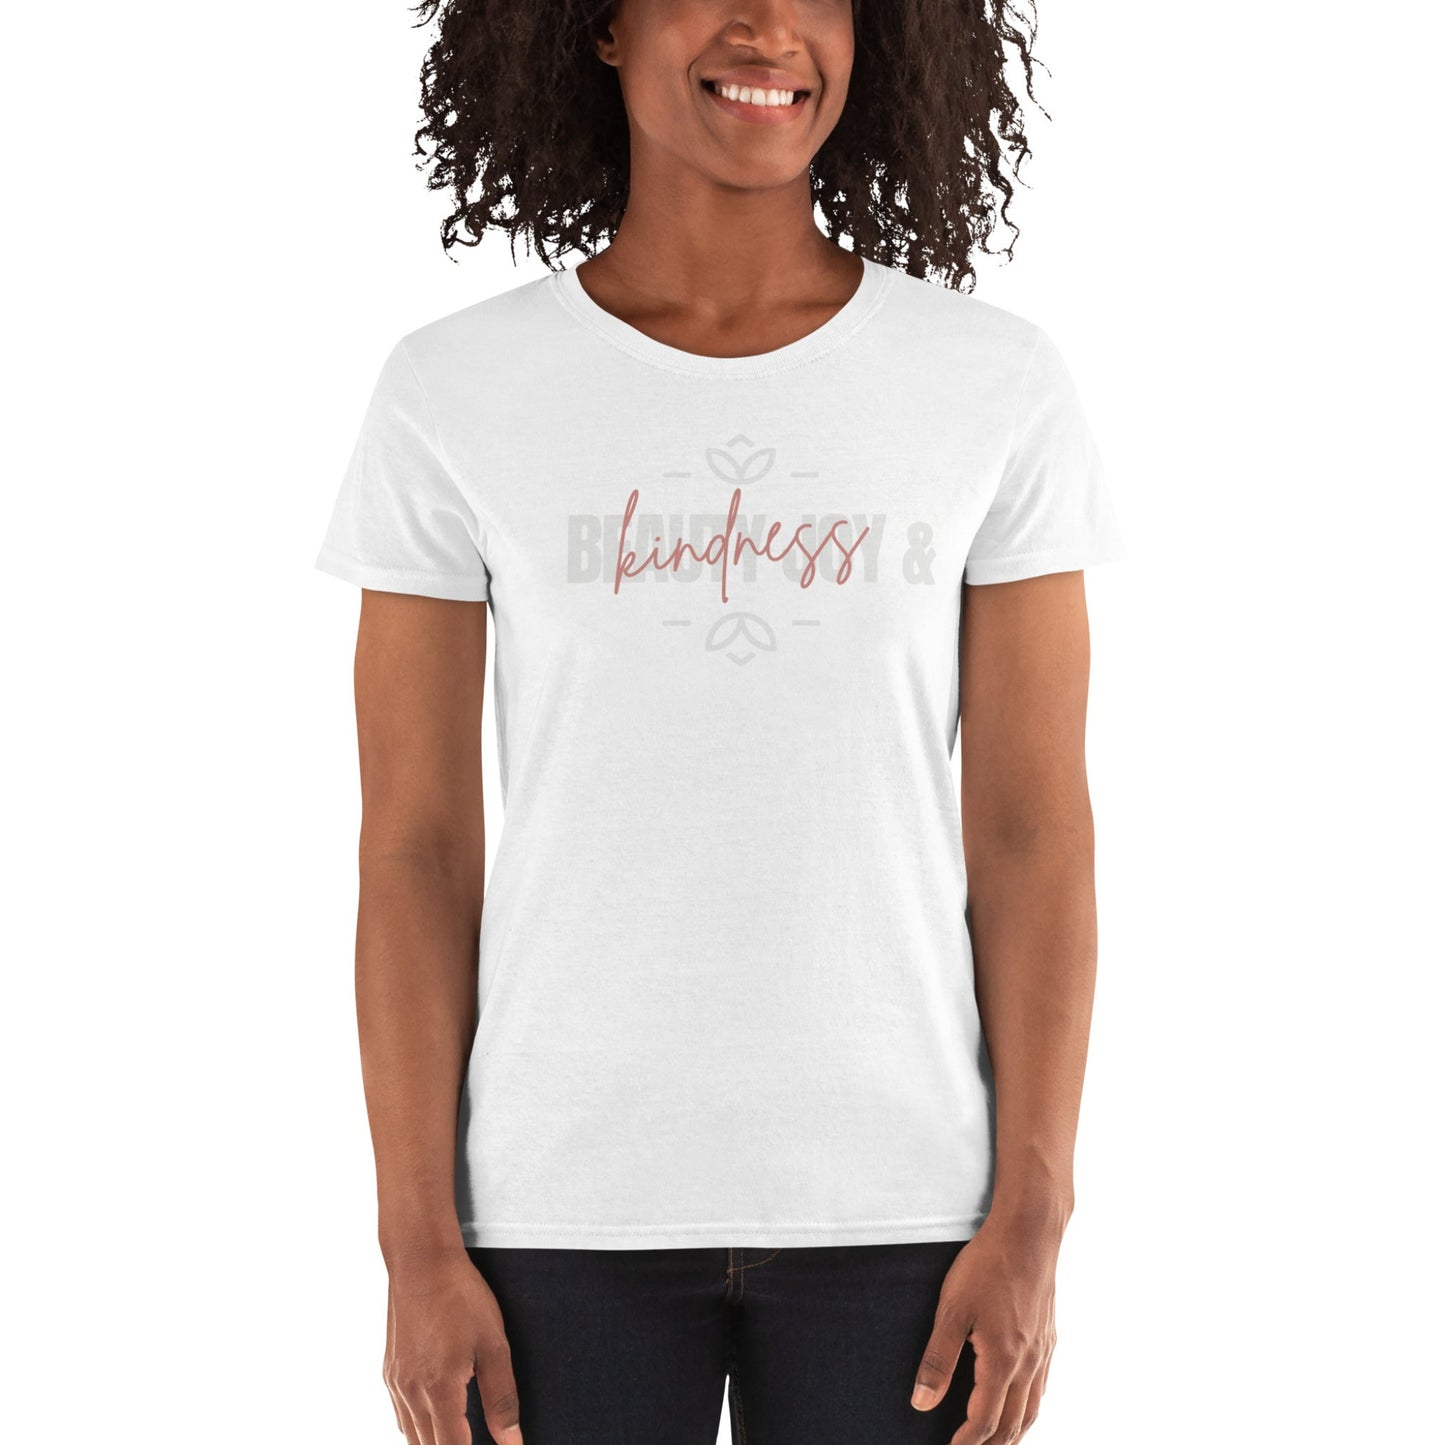 Beauty, Joy & Kindness Women's short sleeve t-shirt